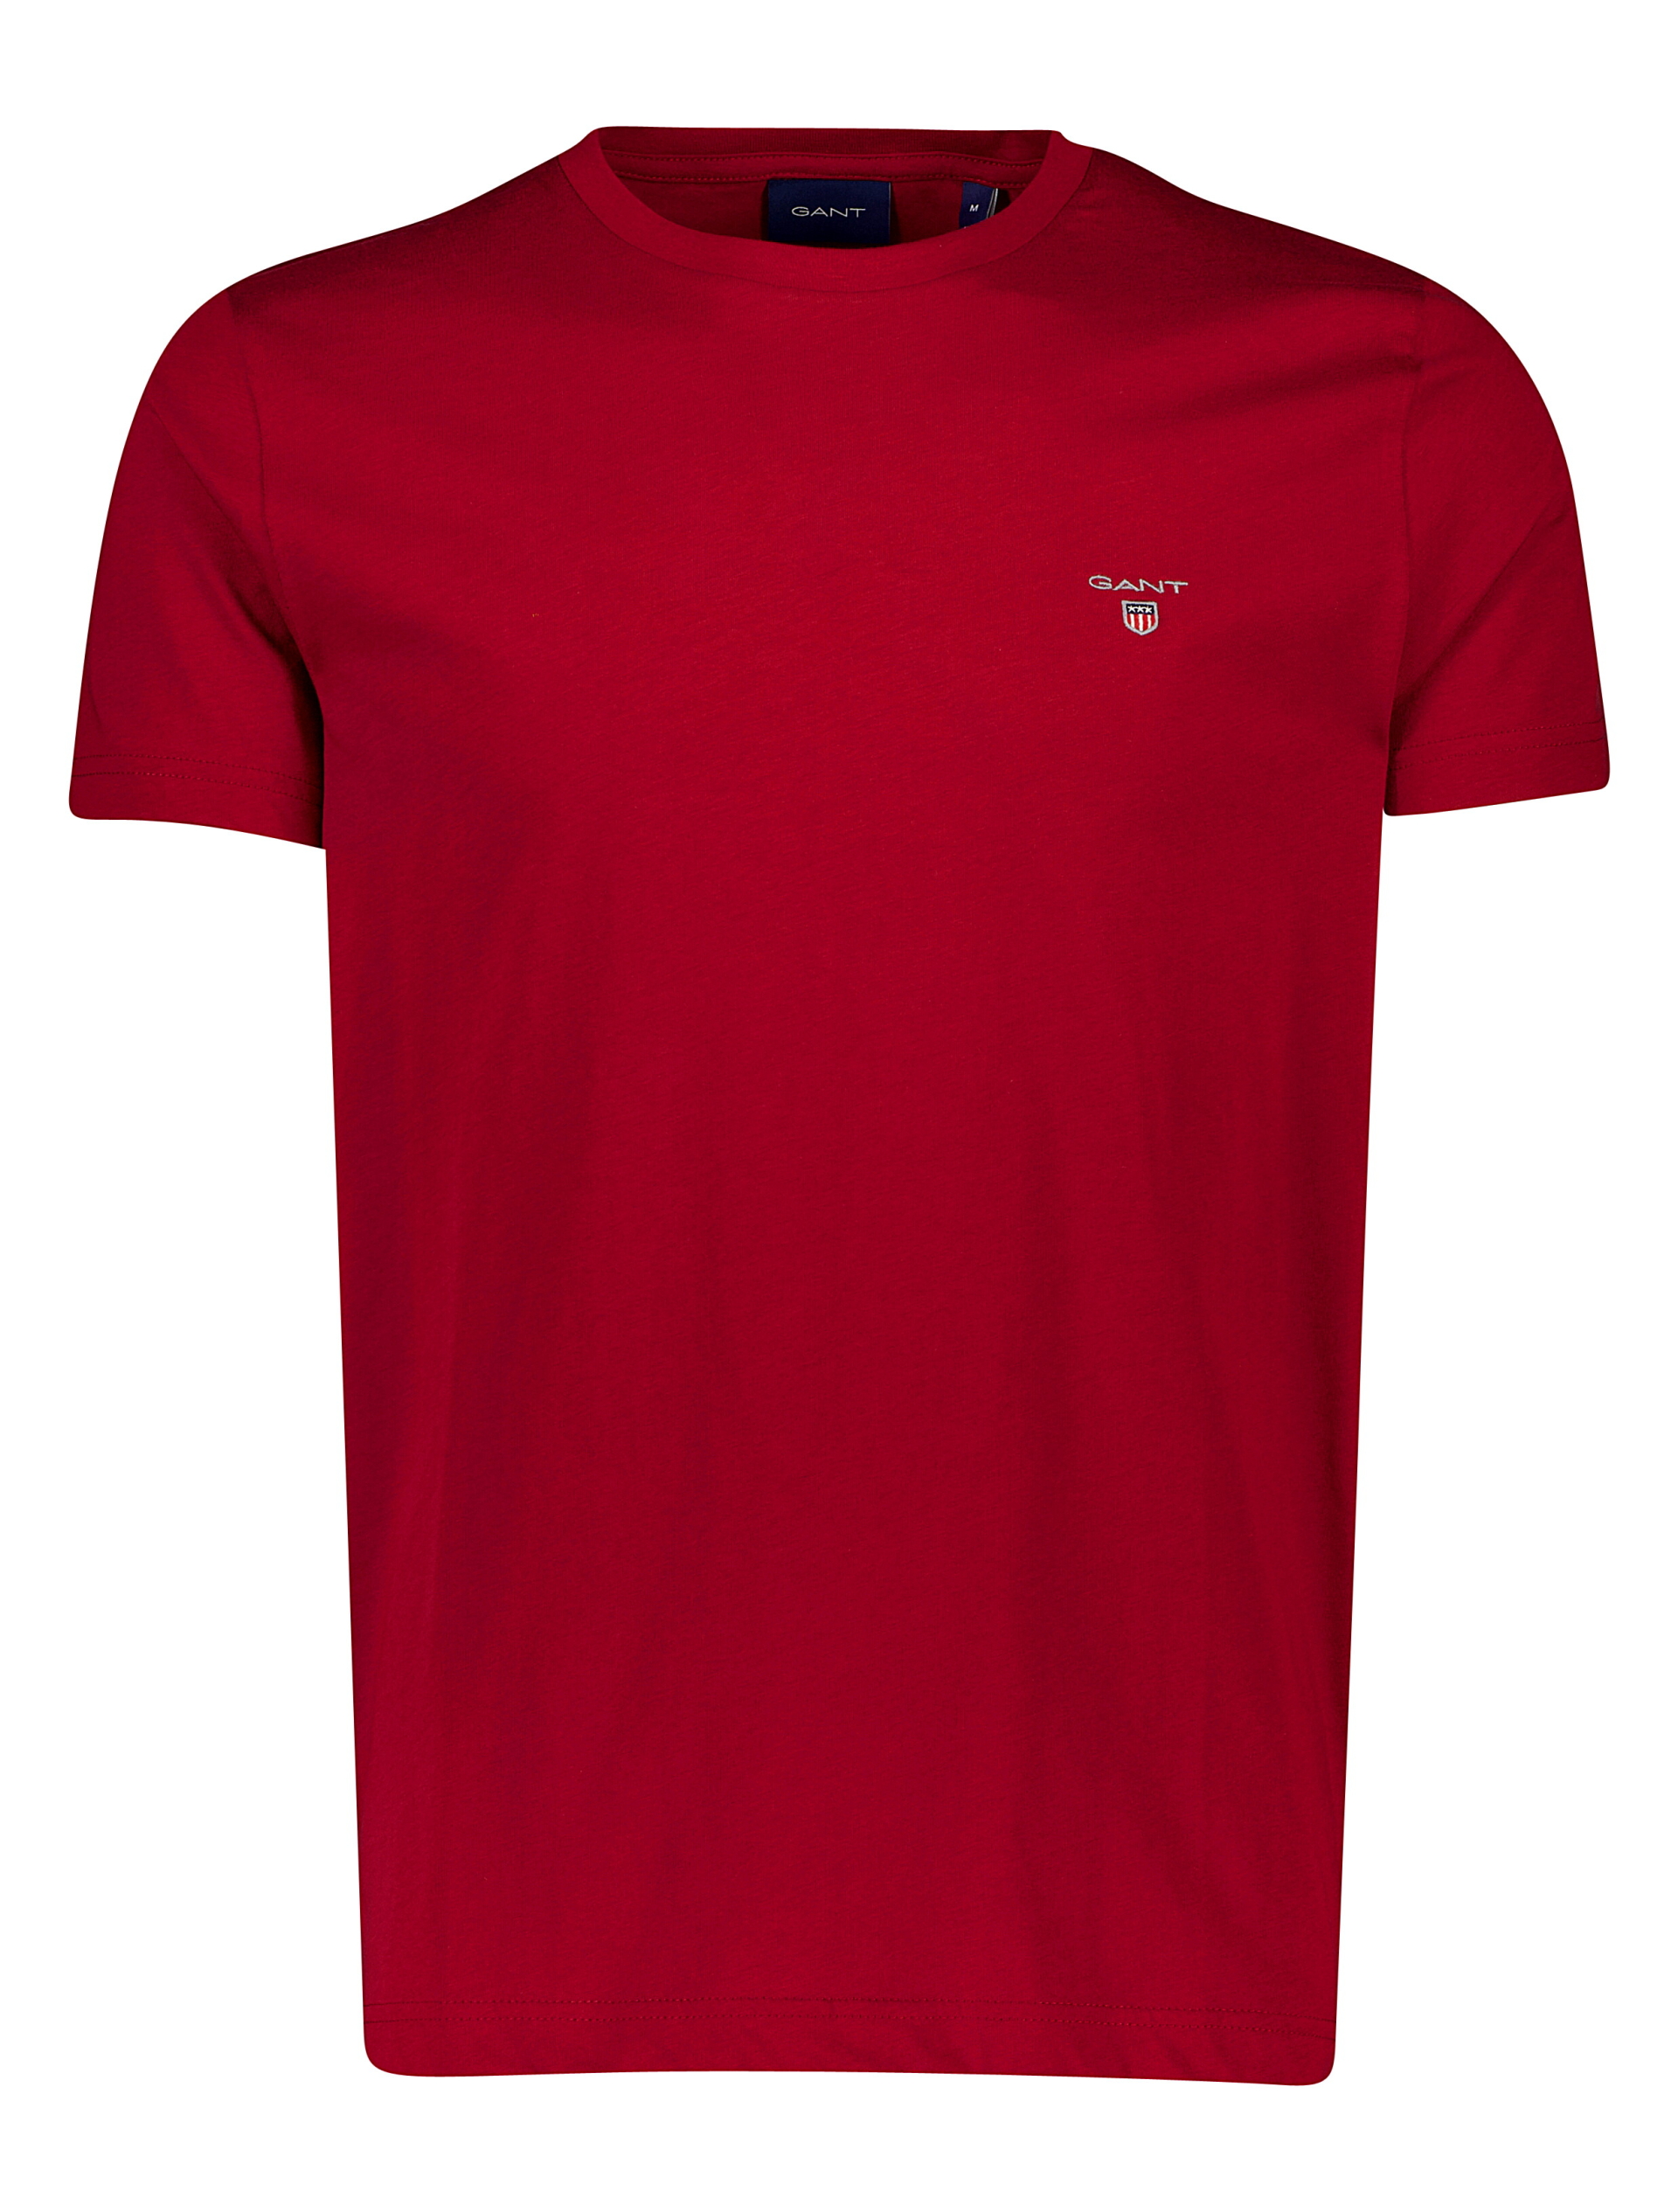 Gant T-shirt rød / 617 mahogny red